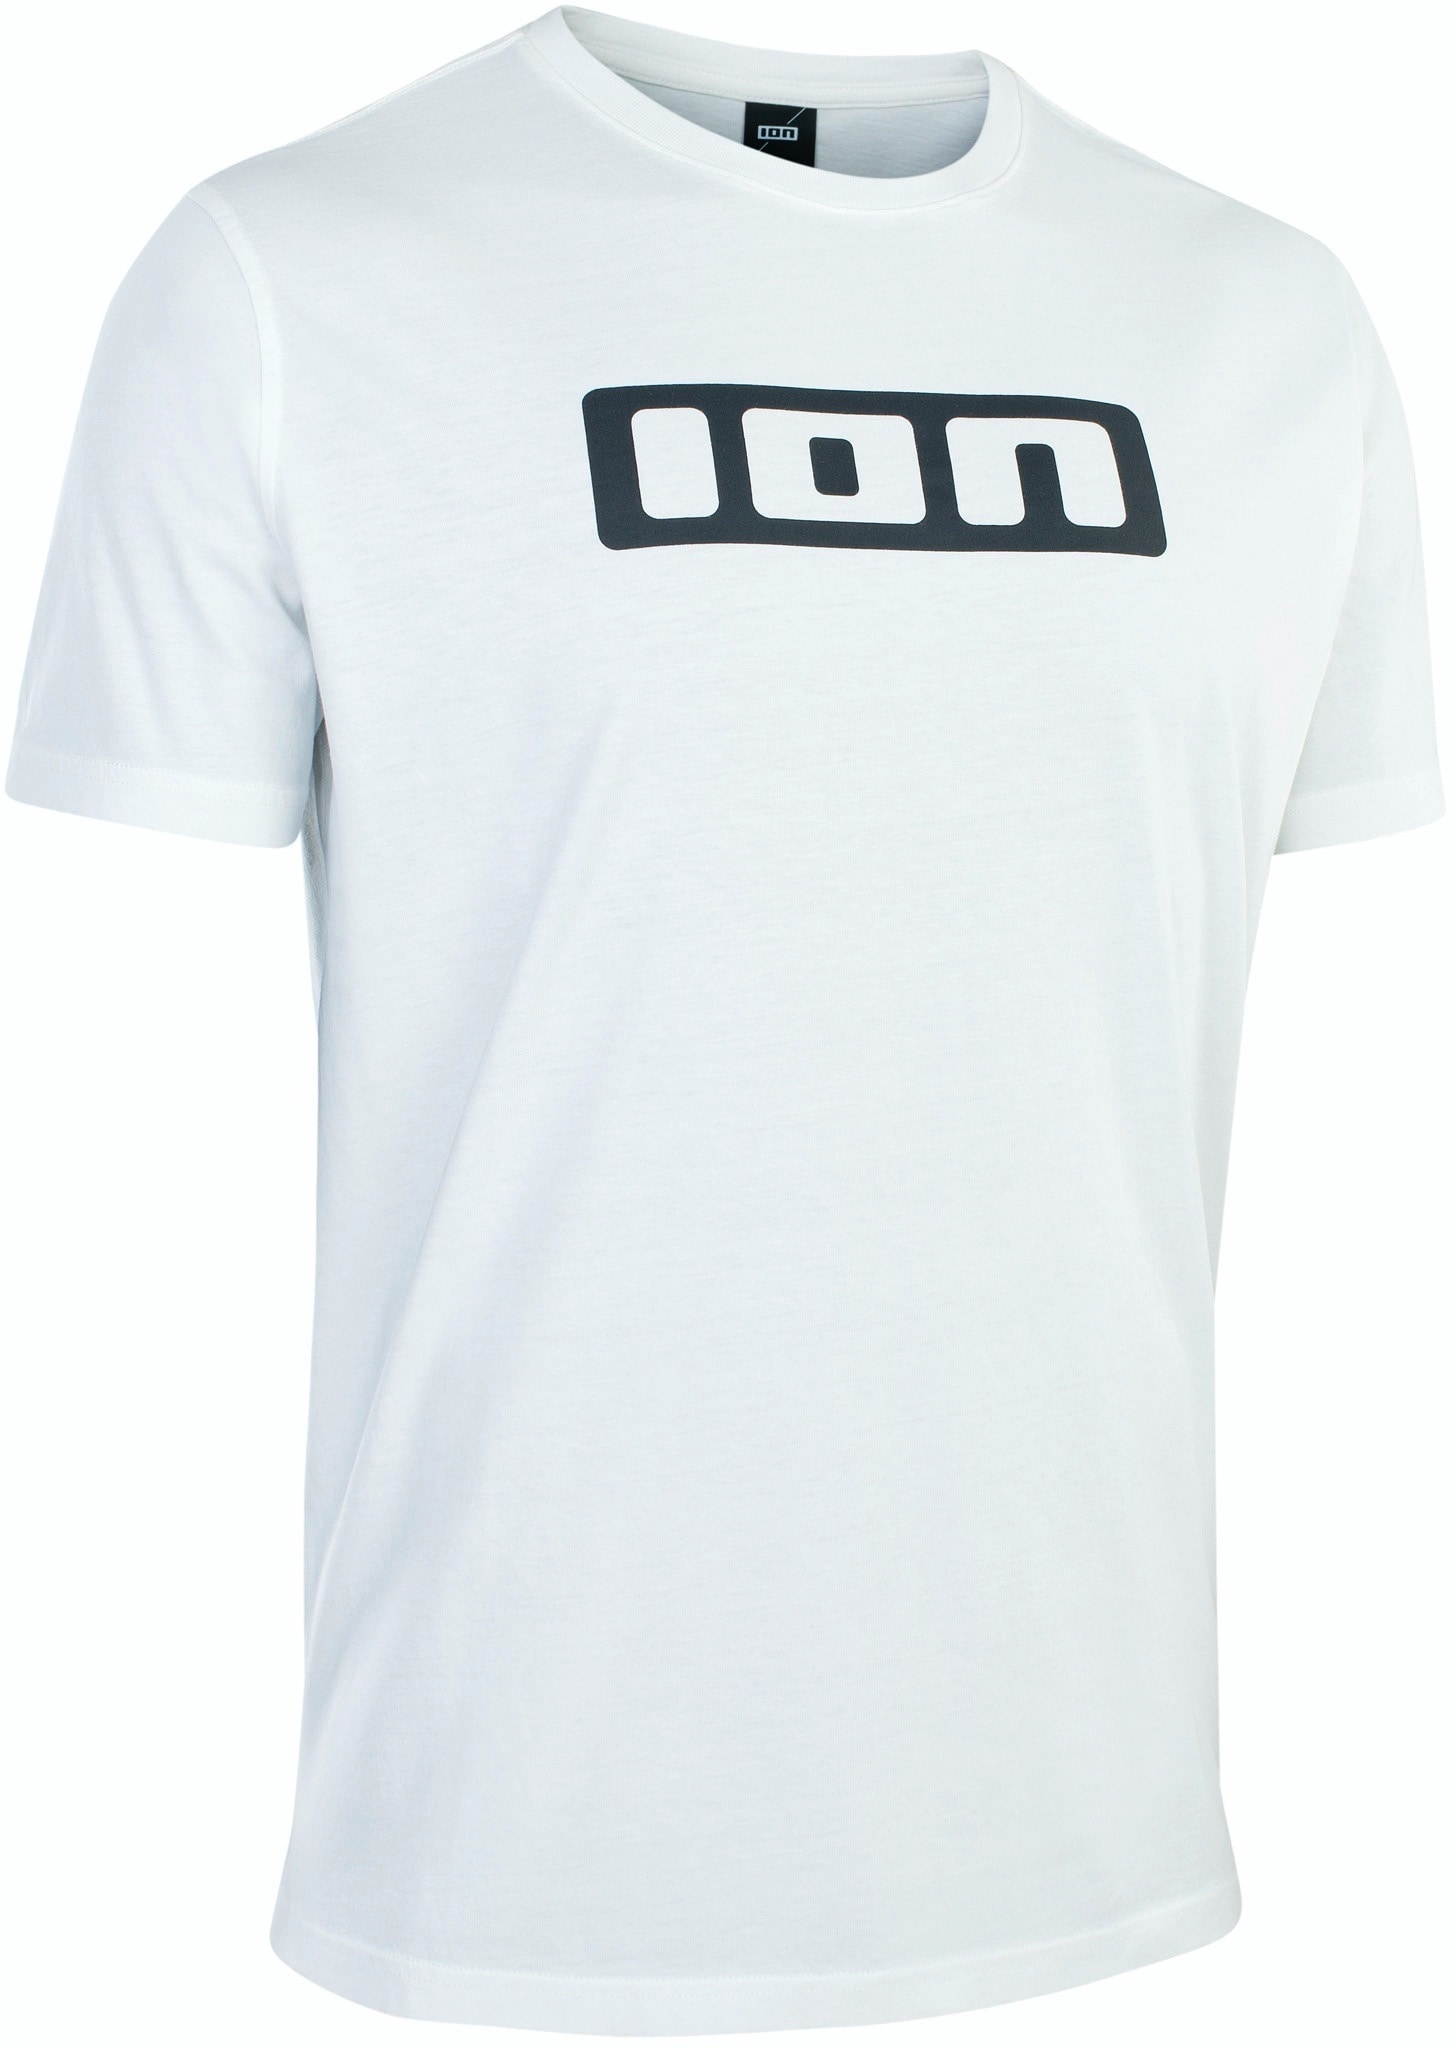 ION Tee Logo SS T-Shirt 22 Shirt Sommer Strand Beach surf cool, Größe: L, Farbe: black